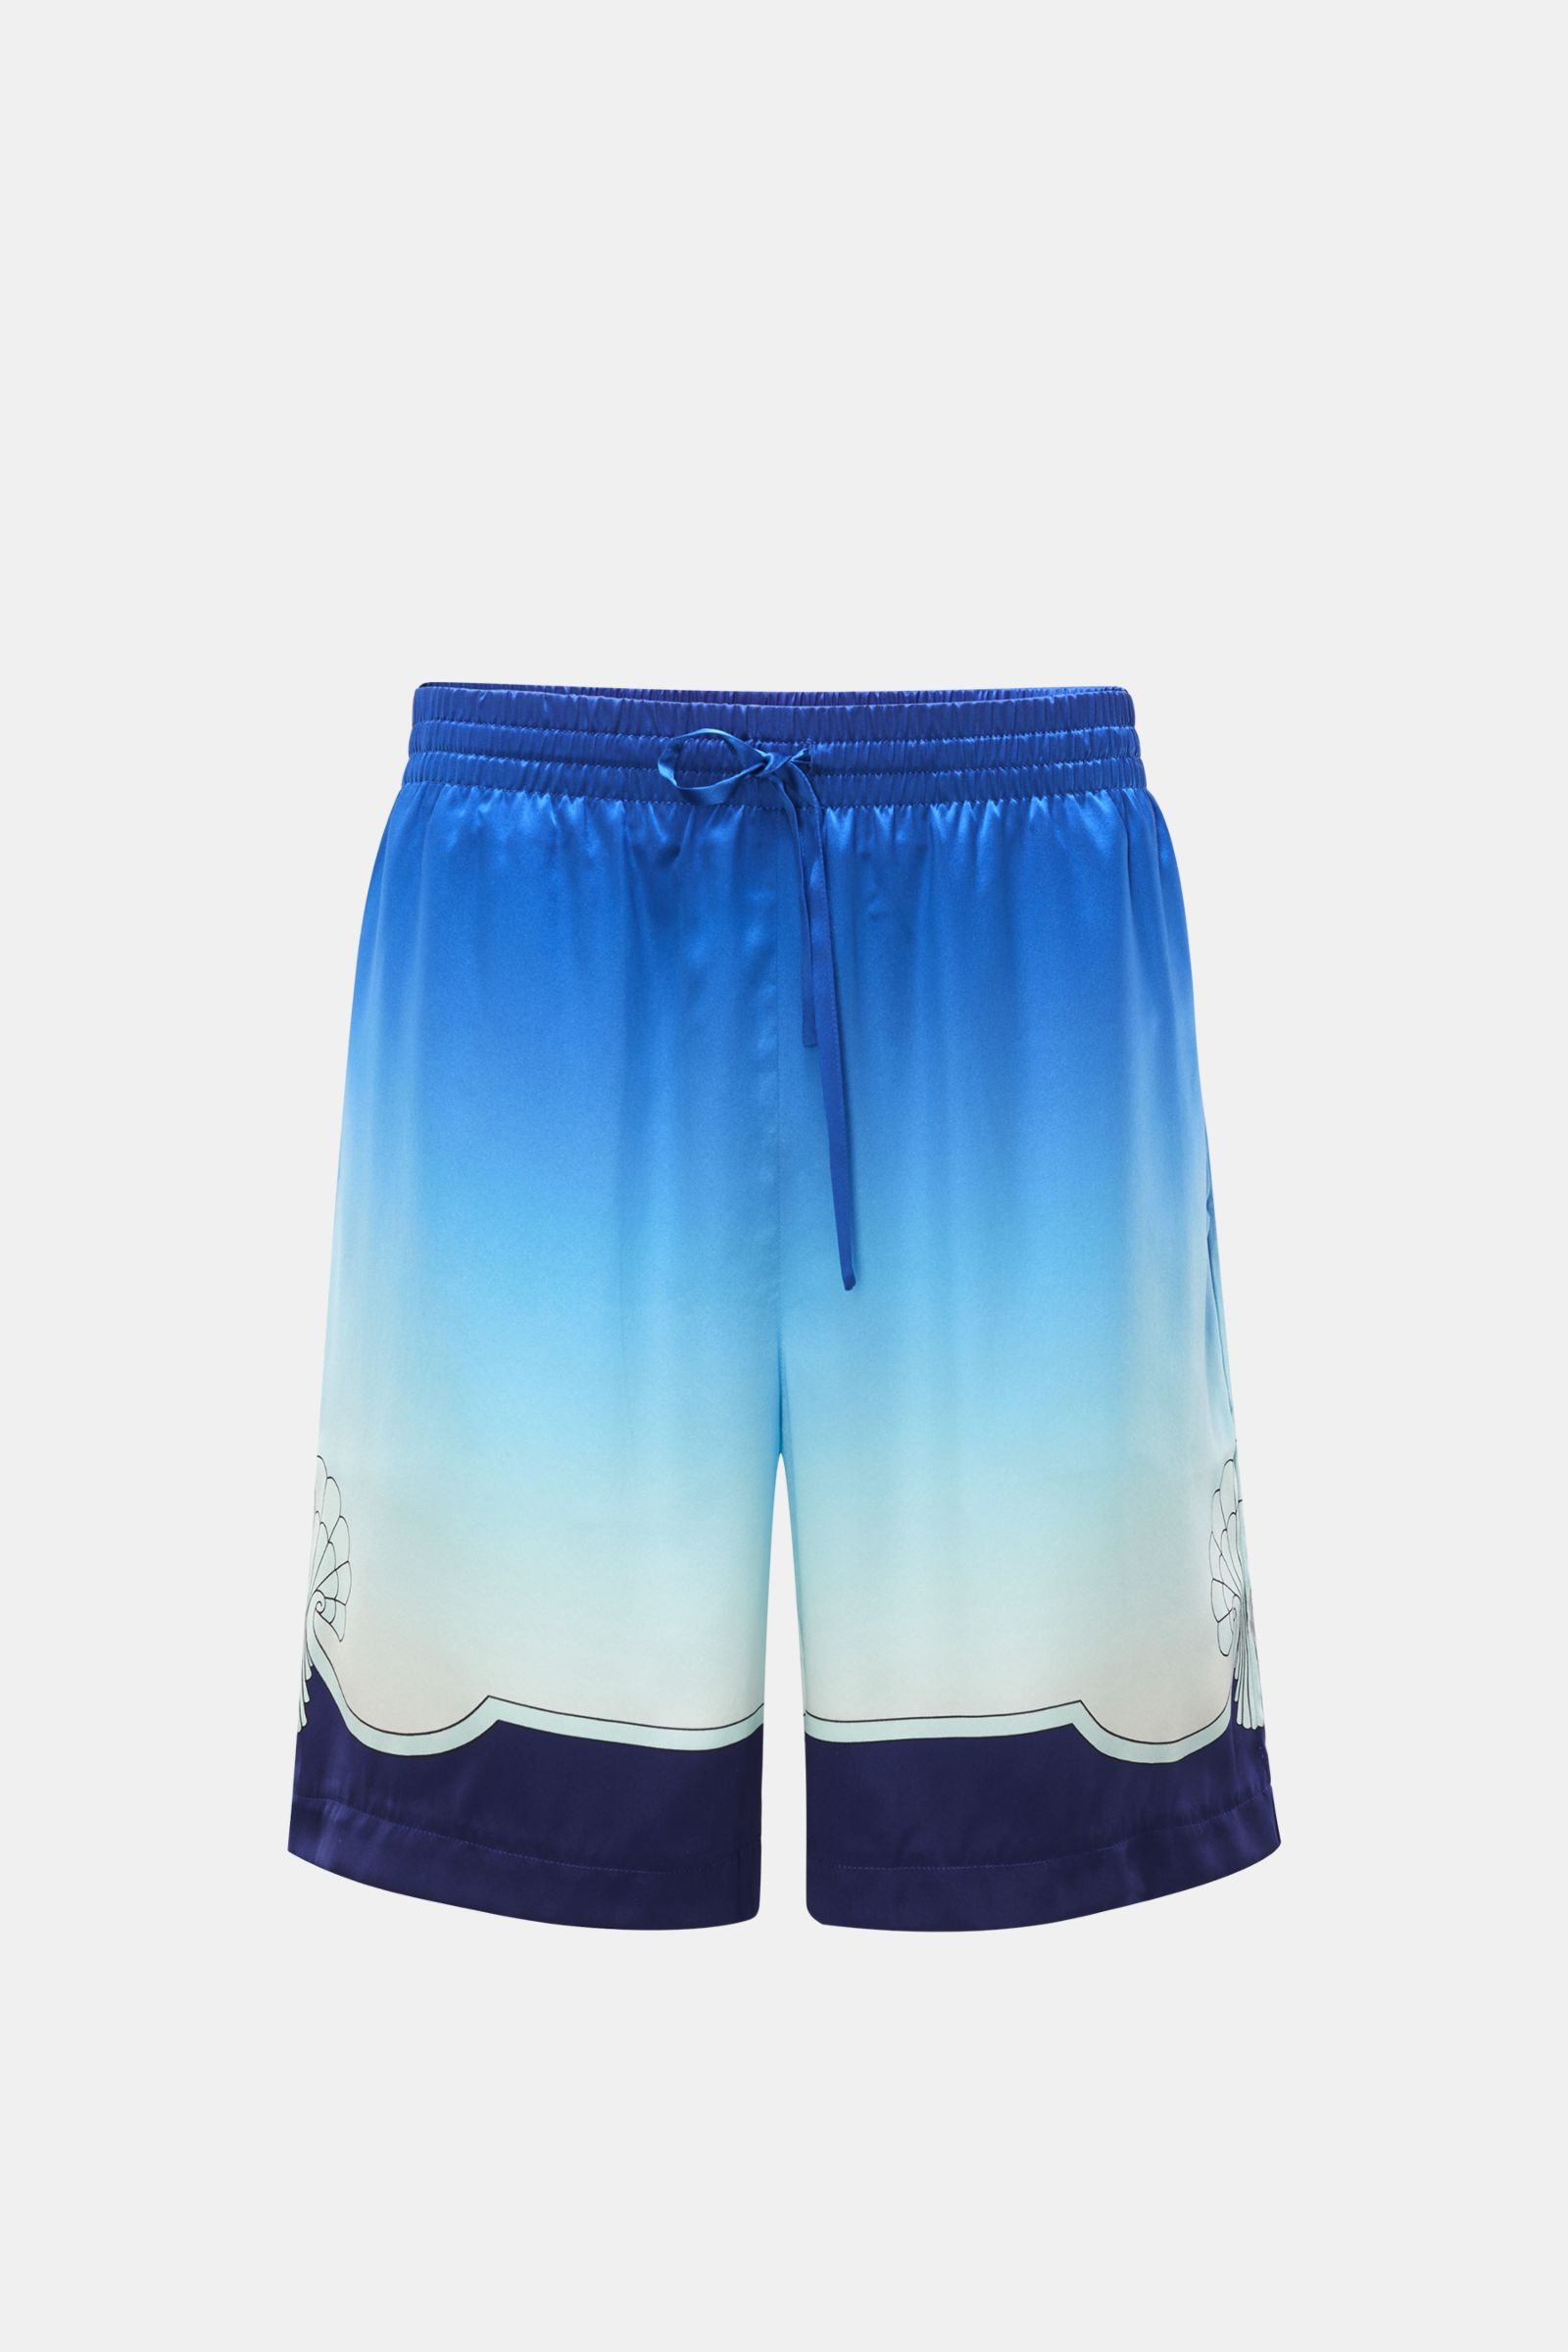 Silk shorts 'Archway Place Vendome' blue/light blue patterned